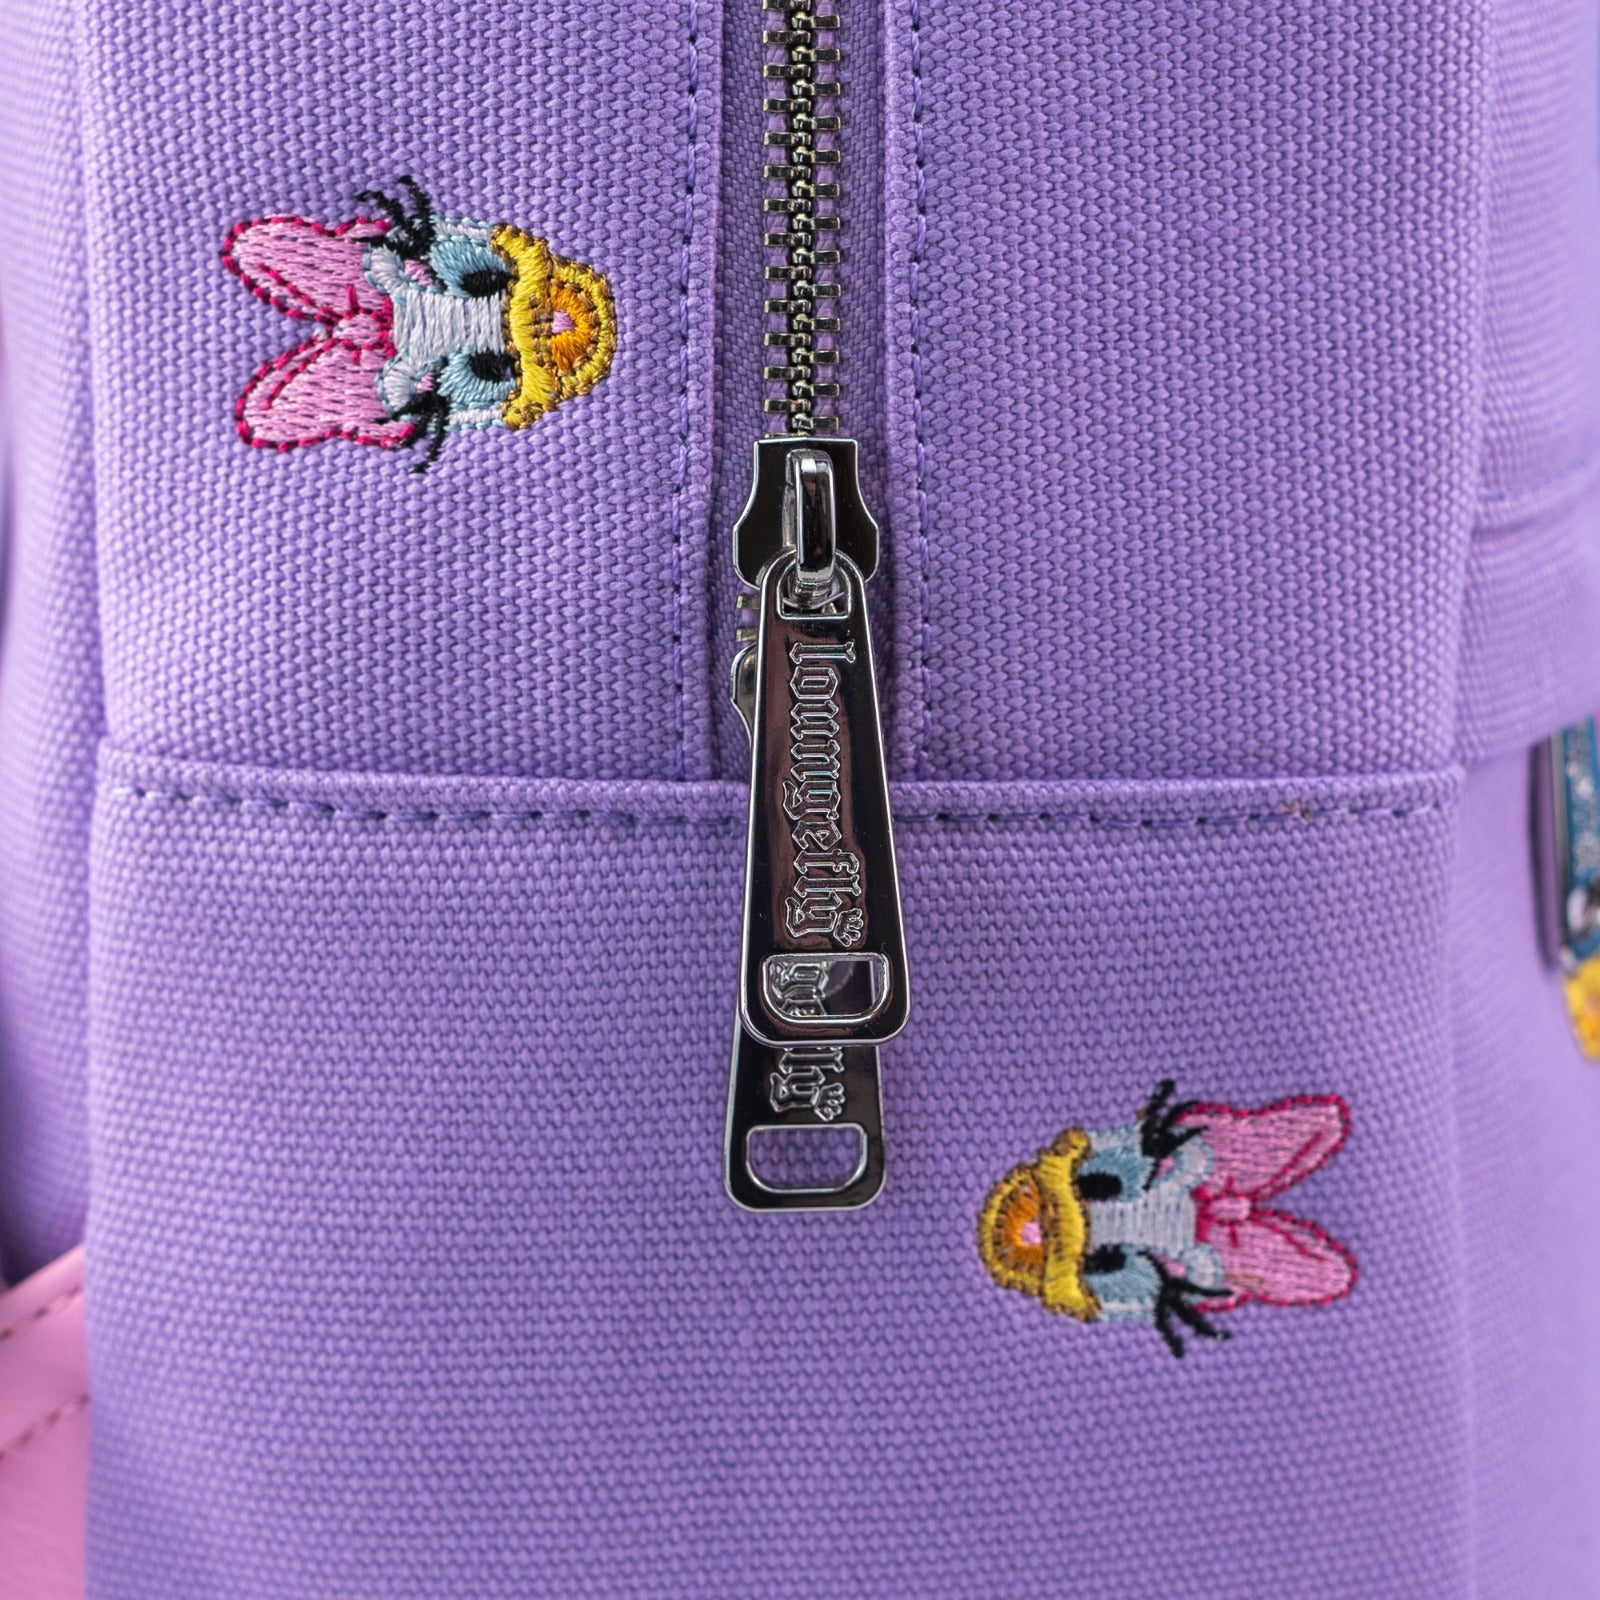 Loungefly x Disney Daisy Duck AOP Canvas Backpack